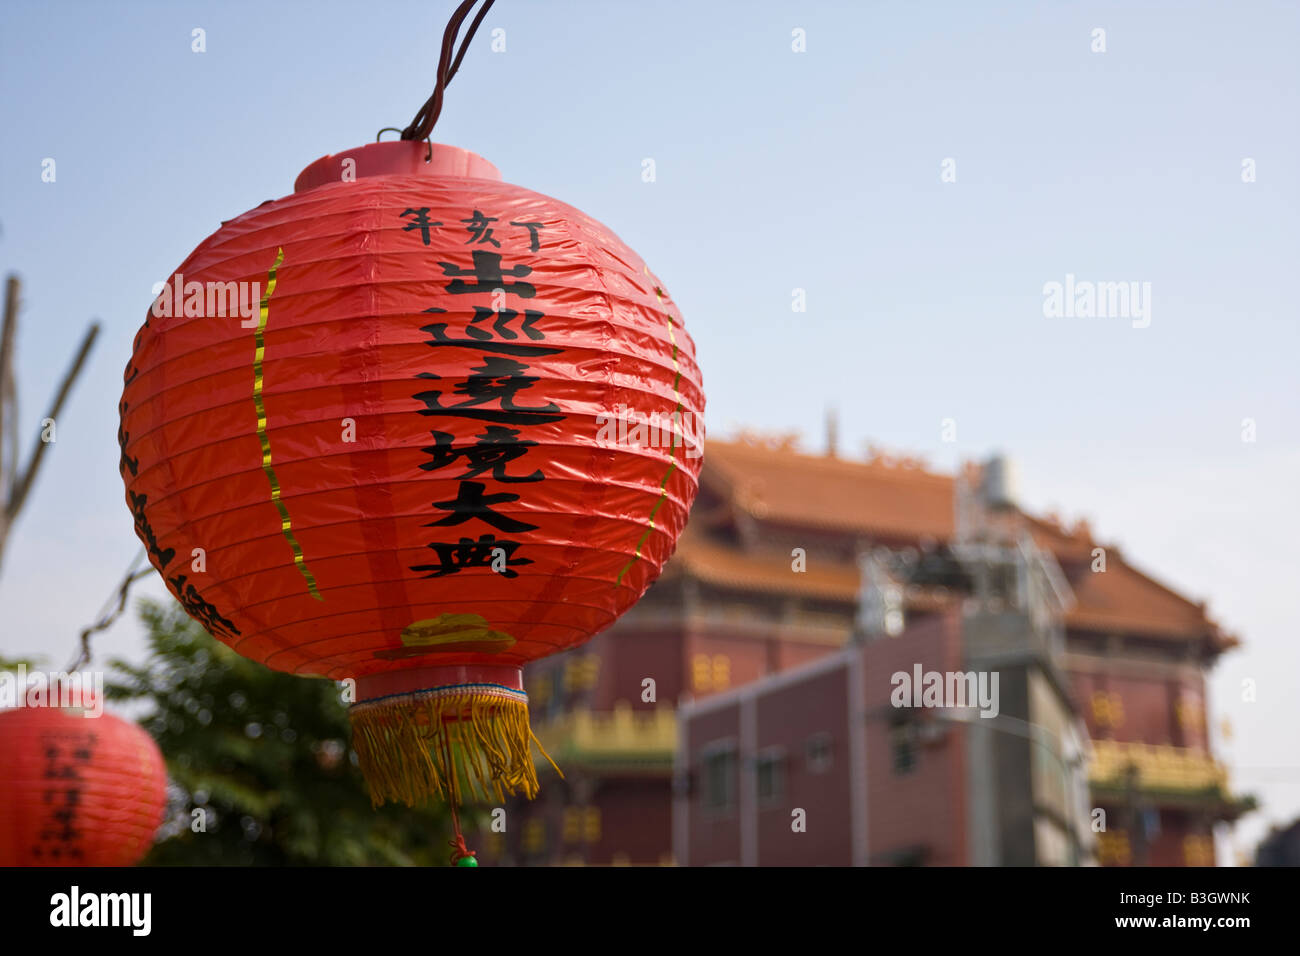 Chinesische, taiwanesische rote Laterne Lotus Lake Zouying Kaohsiung Taiwan Republik von China (ROC) hängen Stockfoto